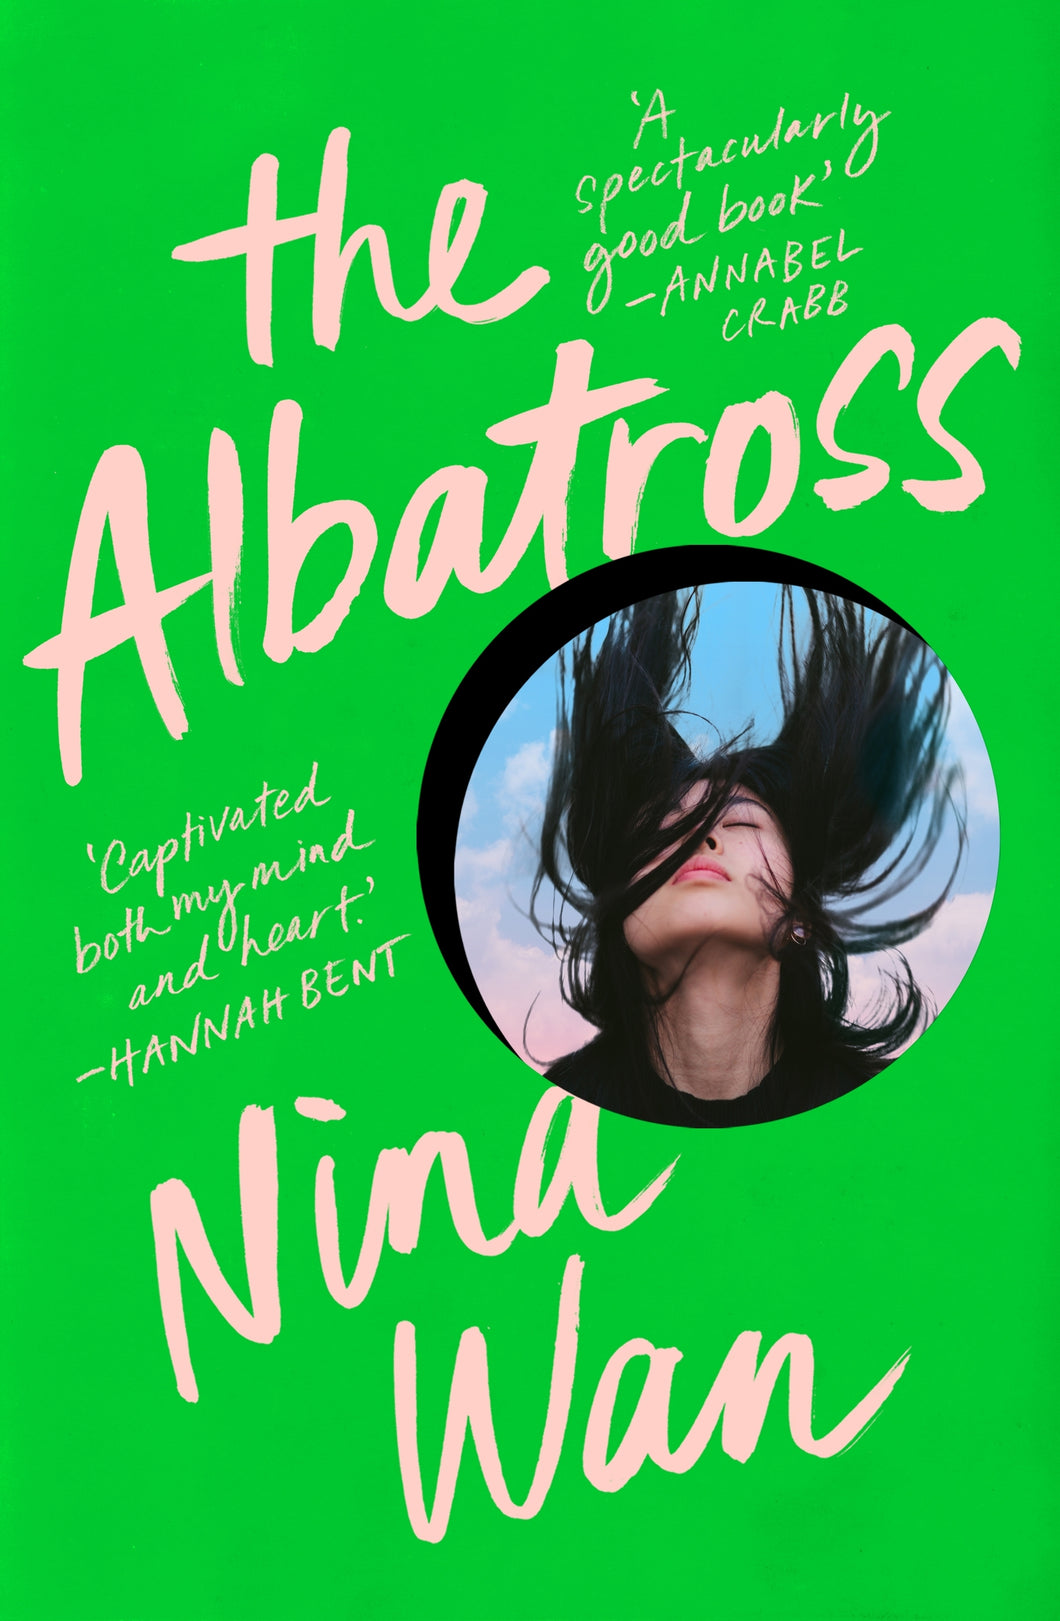 The Albatross by Nina Wan